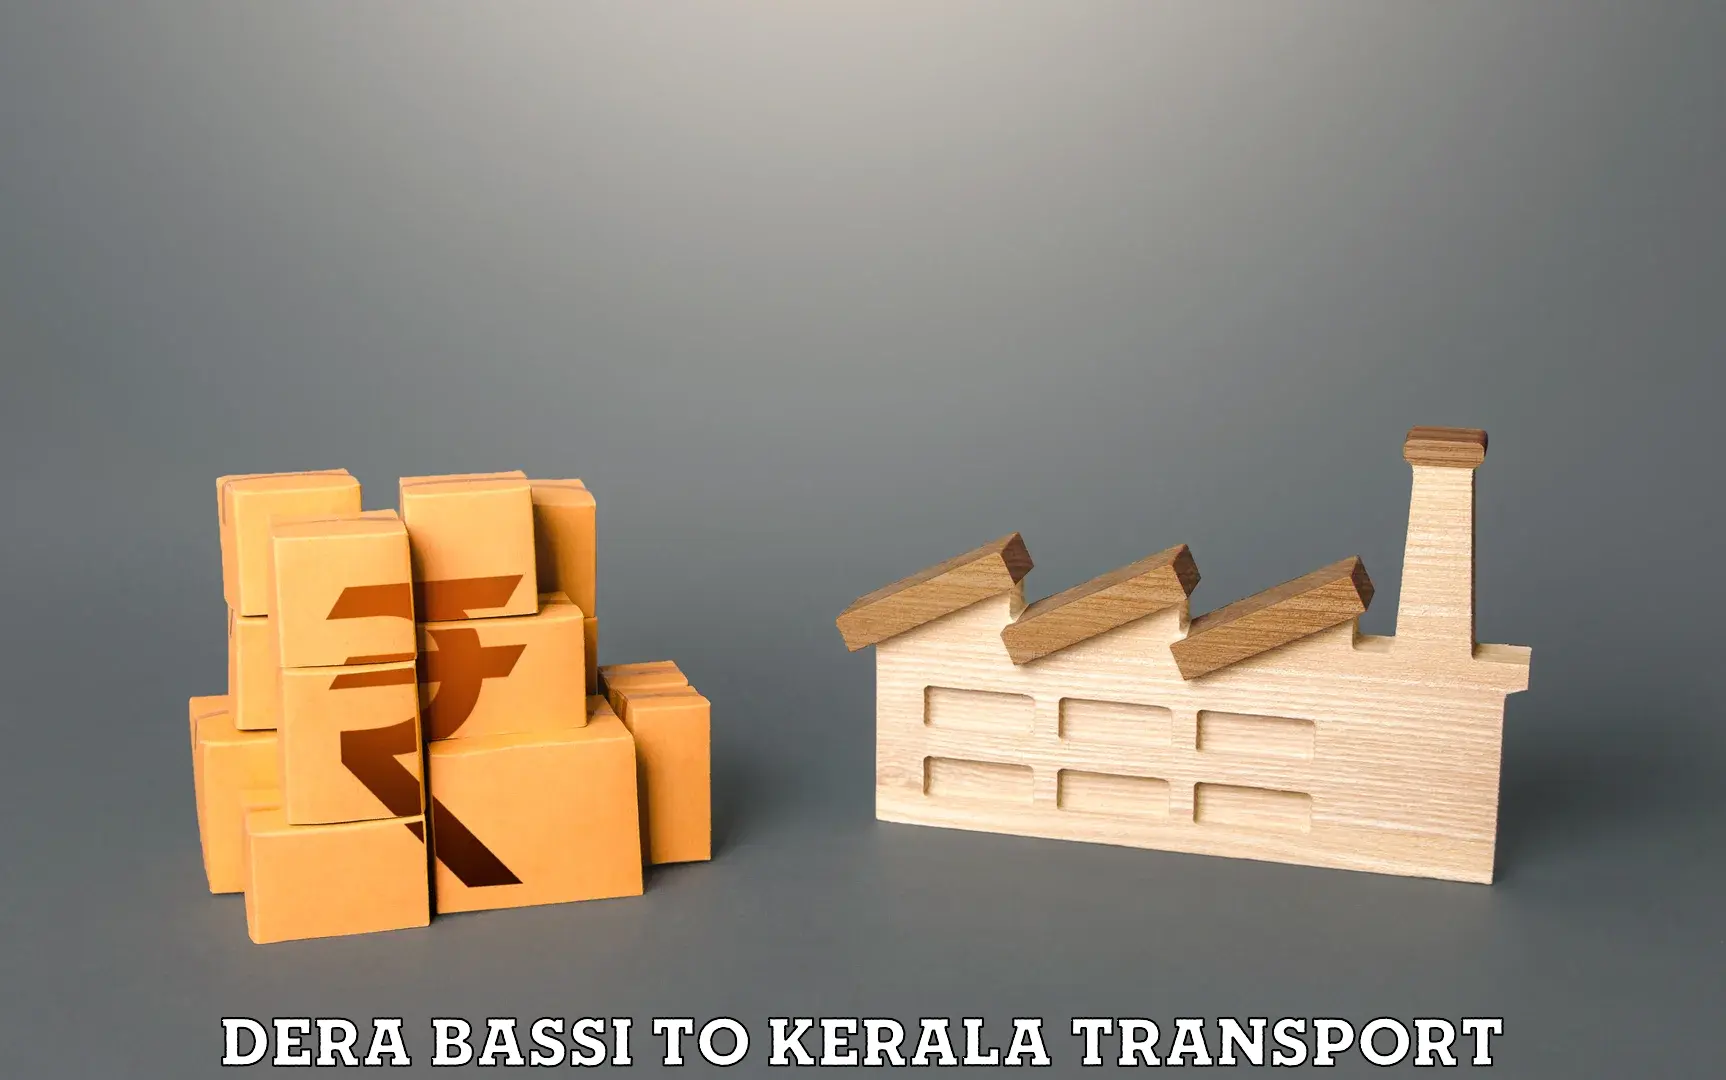 Transport in sharing Dera Bassi to Kerala